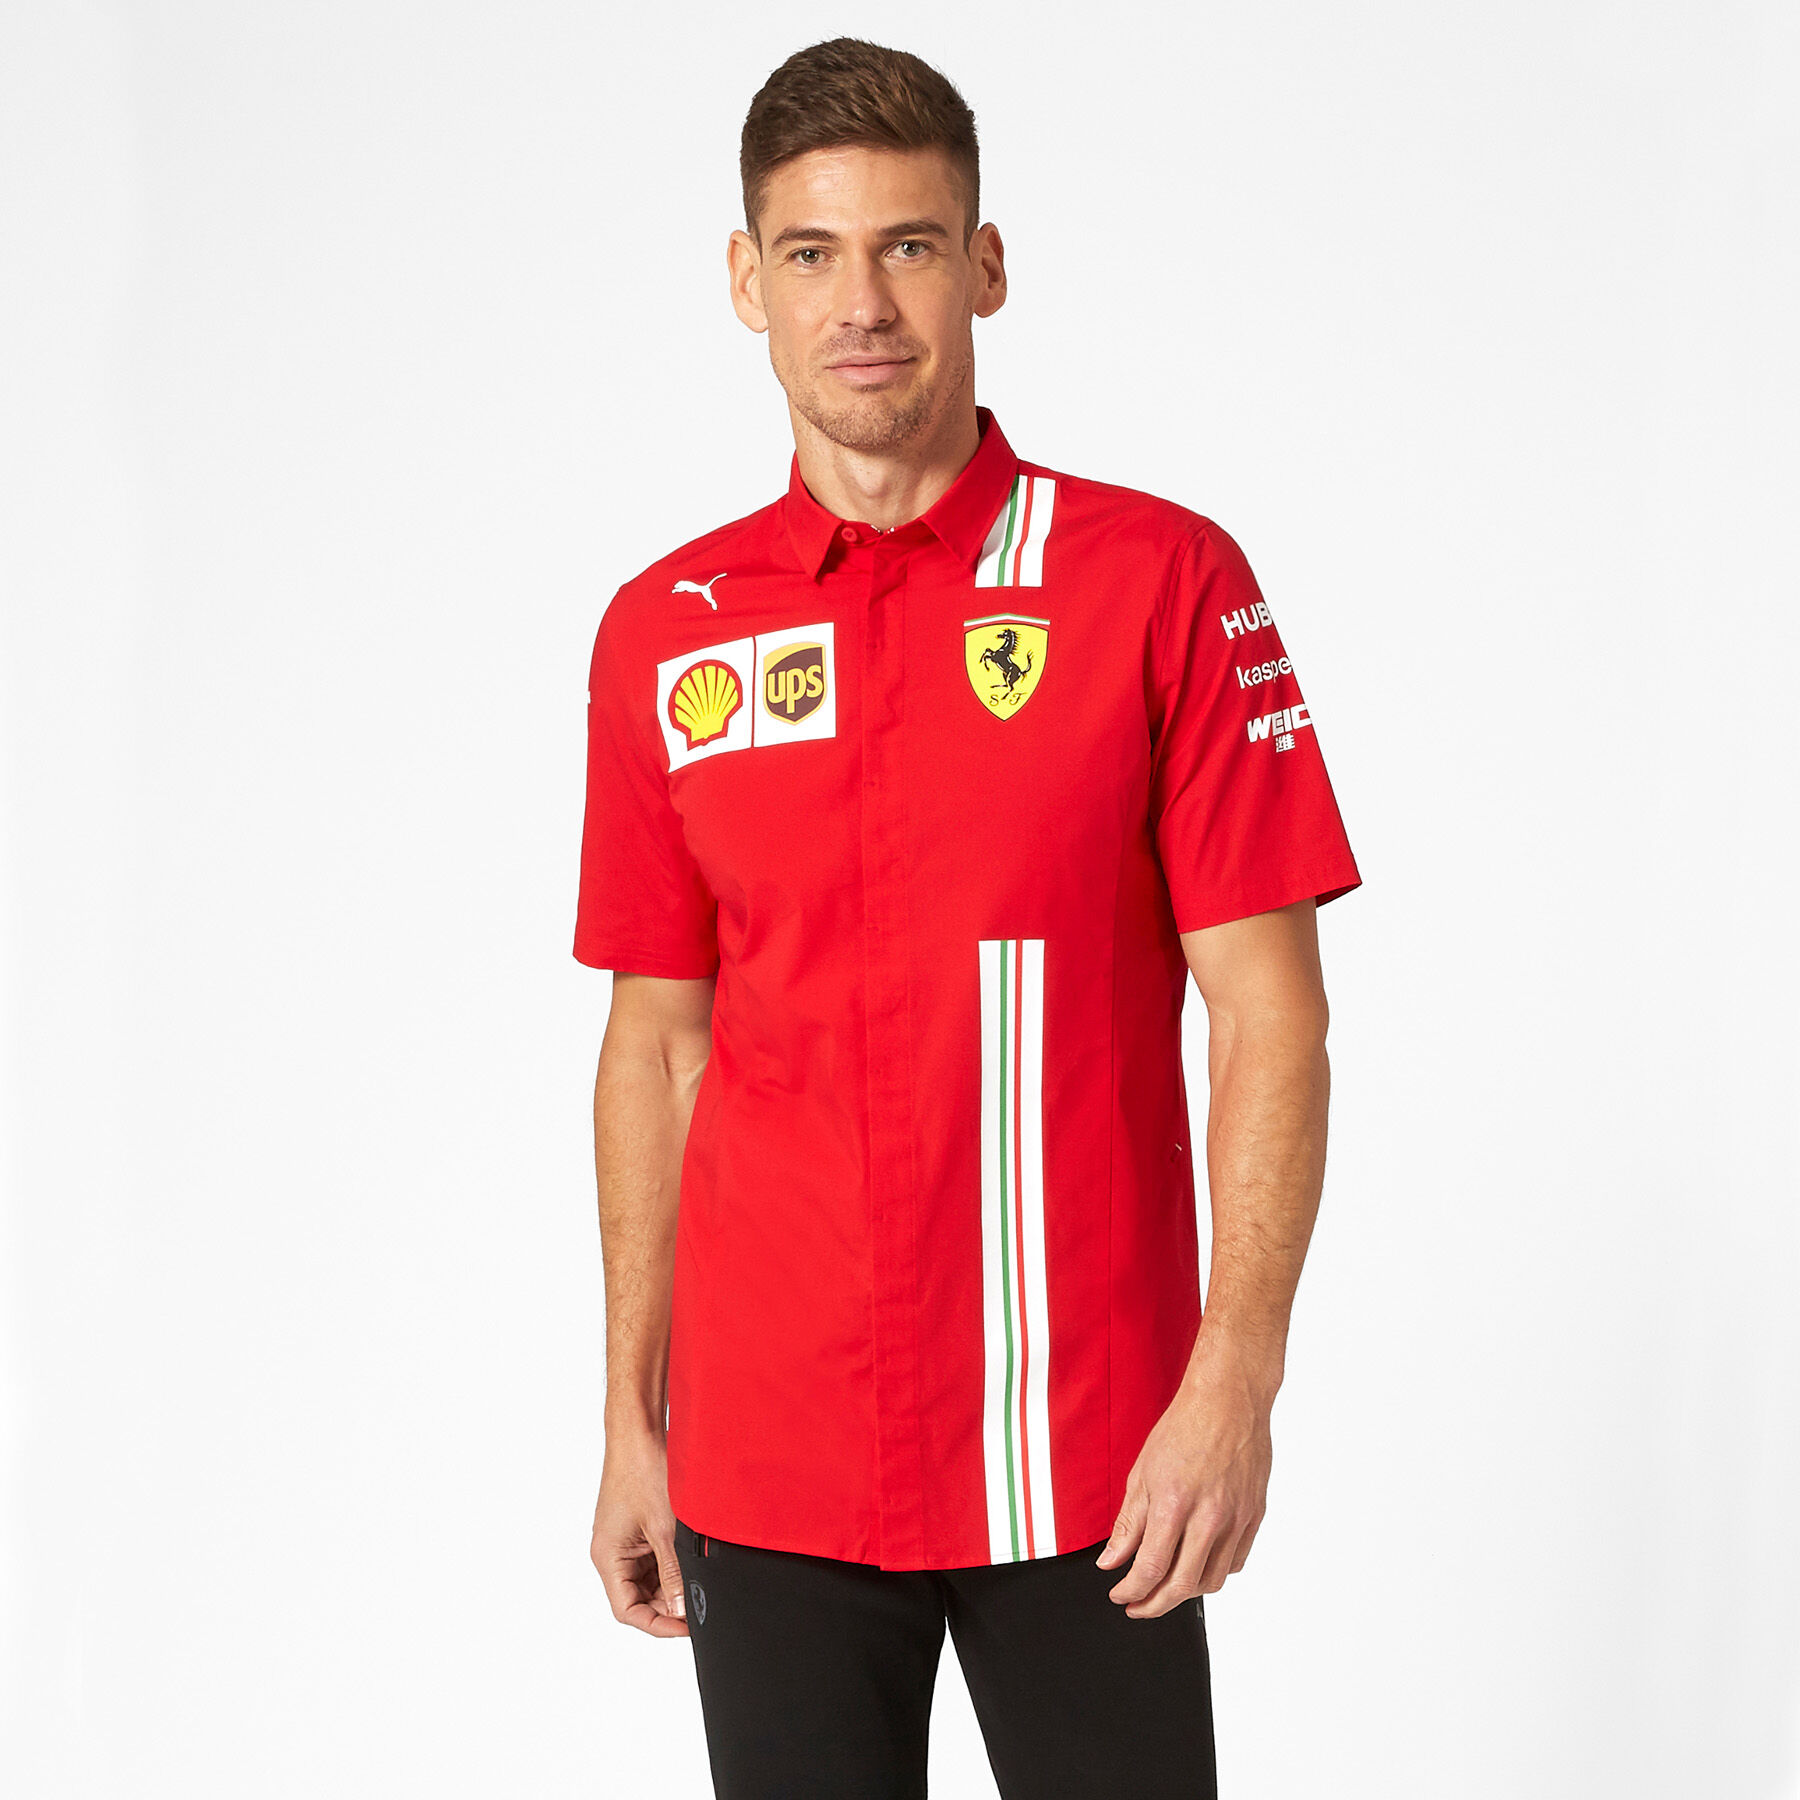 2020 F1 Scuderia Ferrari Official Team Polo Shirt Red Short Sleeve 